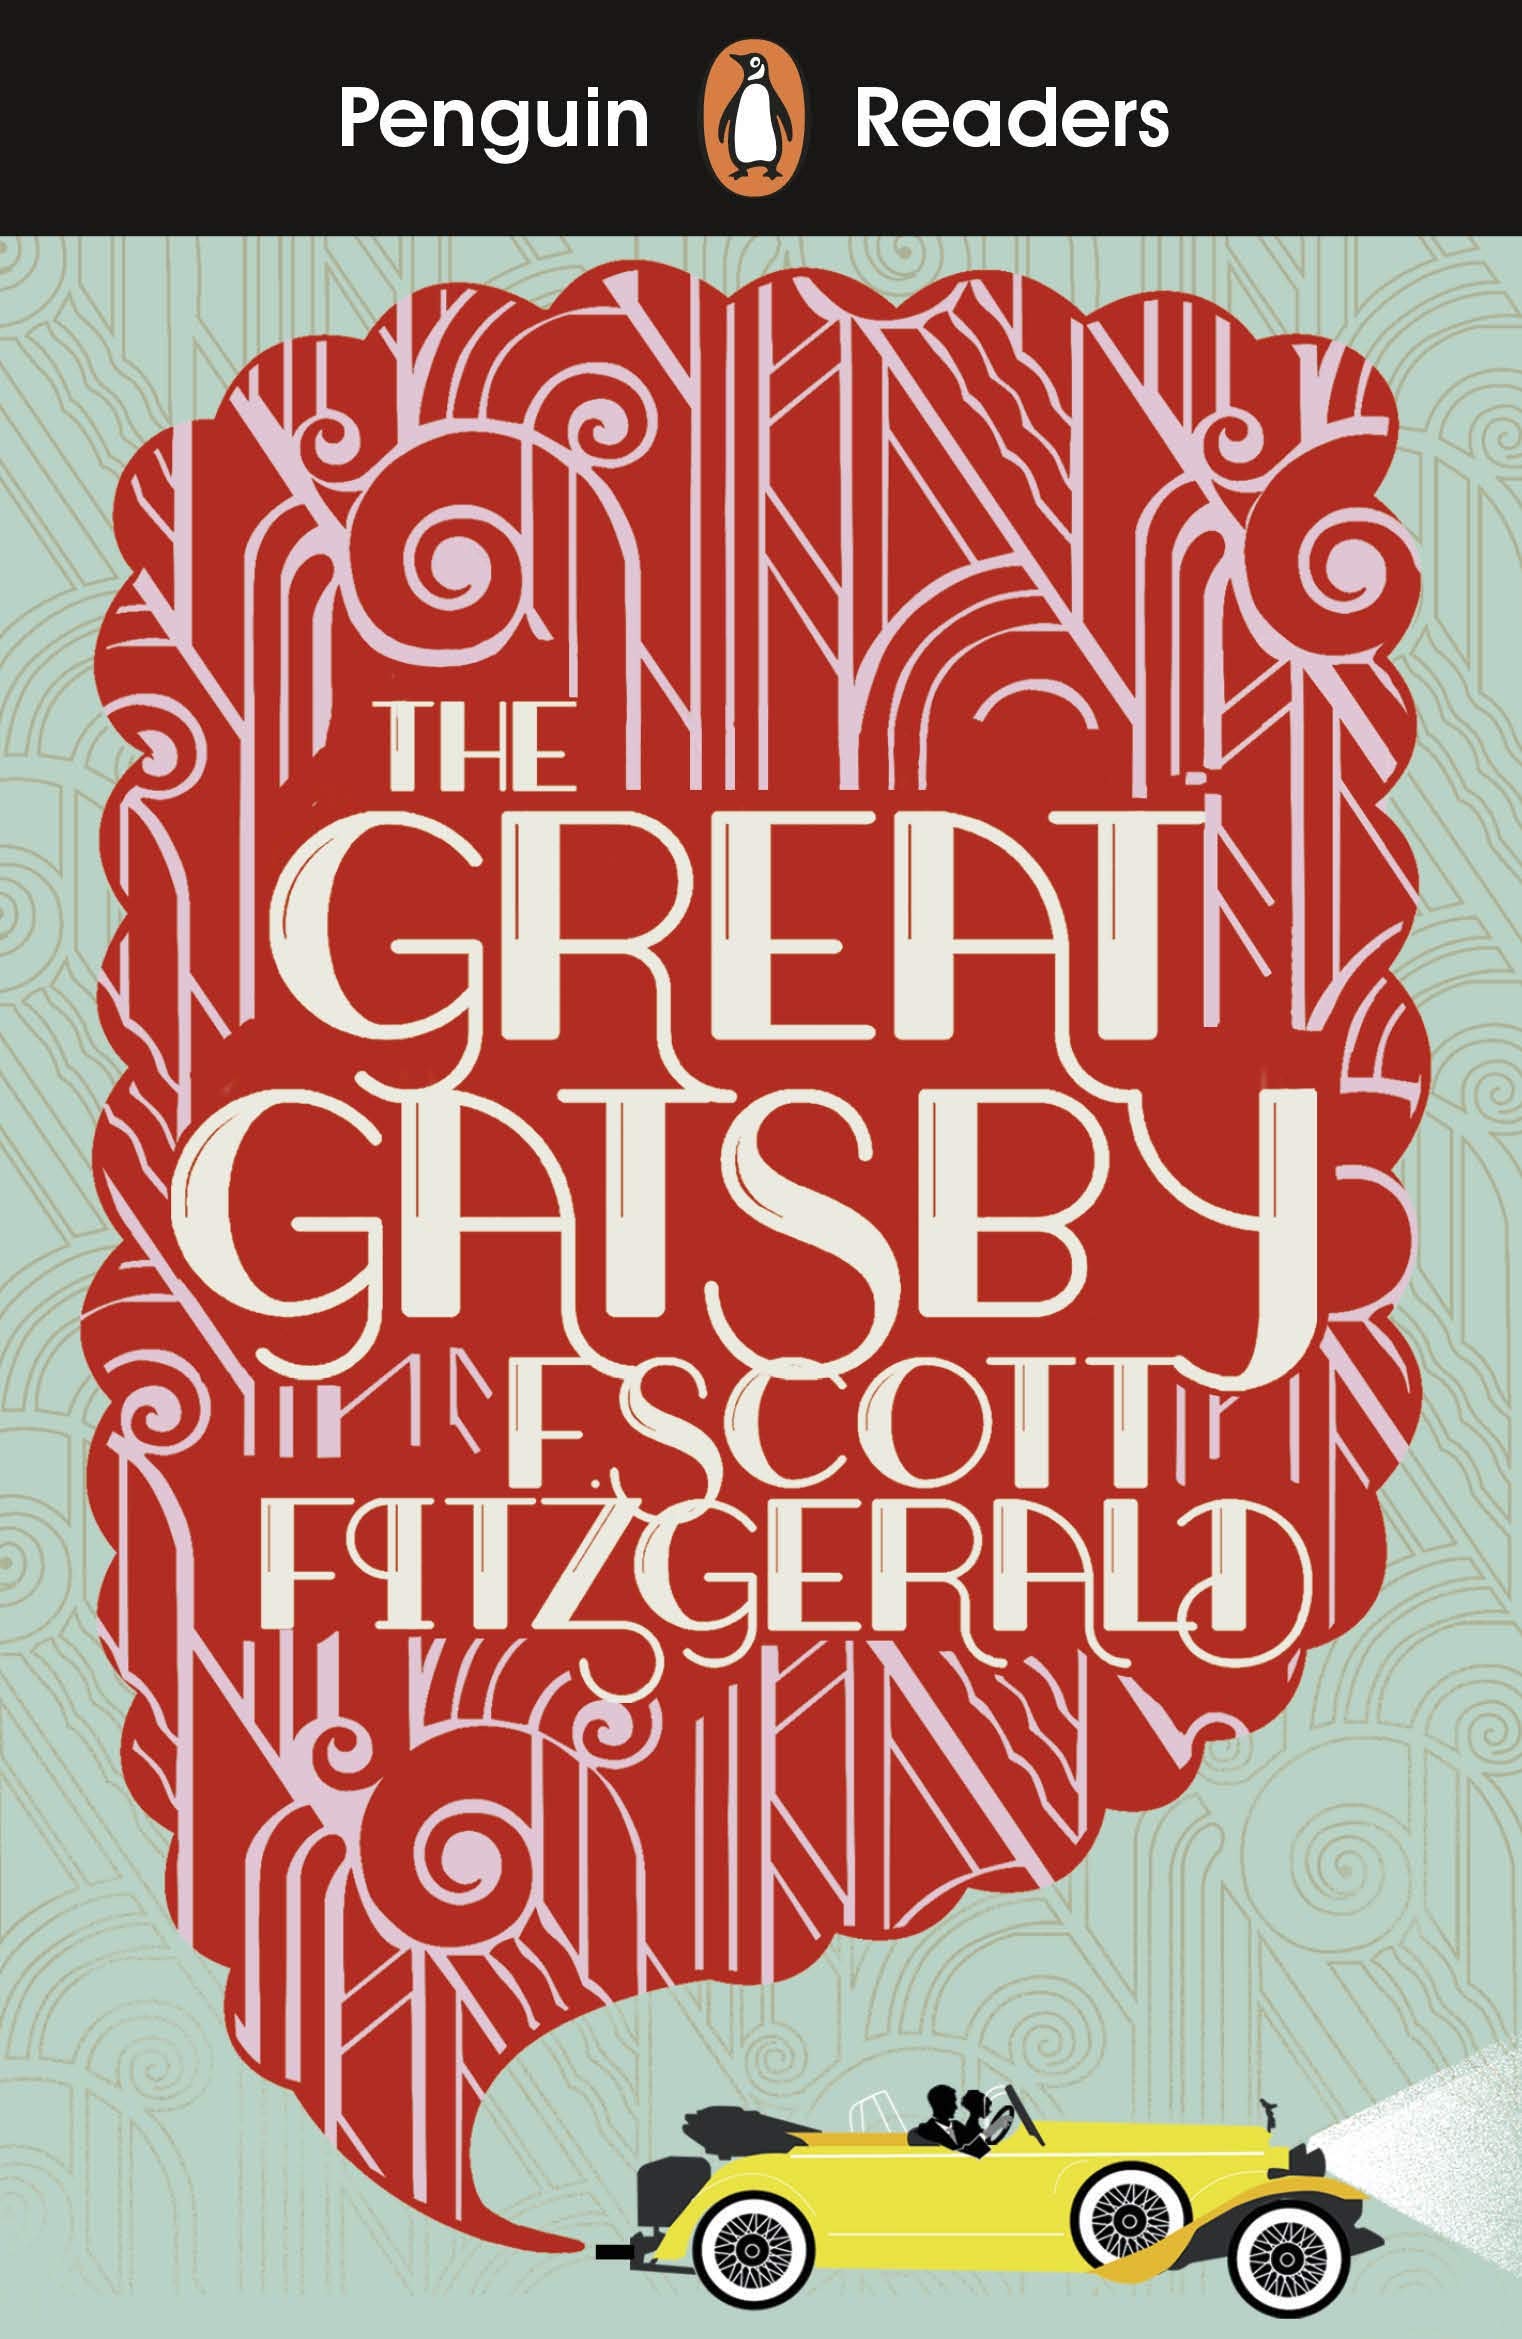 Francis Scott Fitzgerald Penguin Reader Level 3: The Great Gatsby 